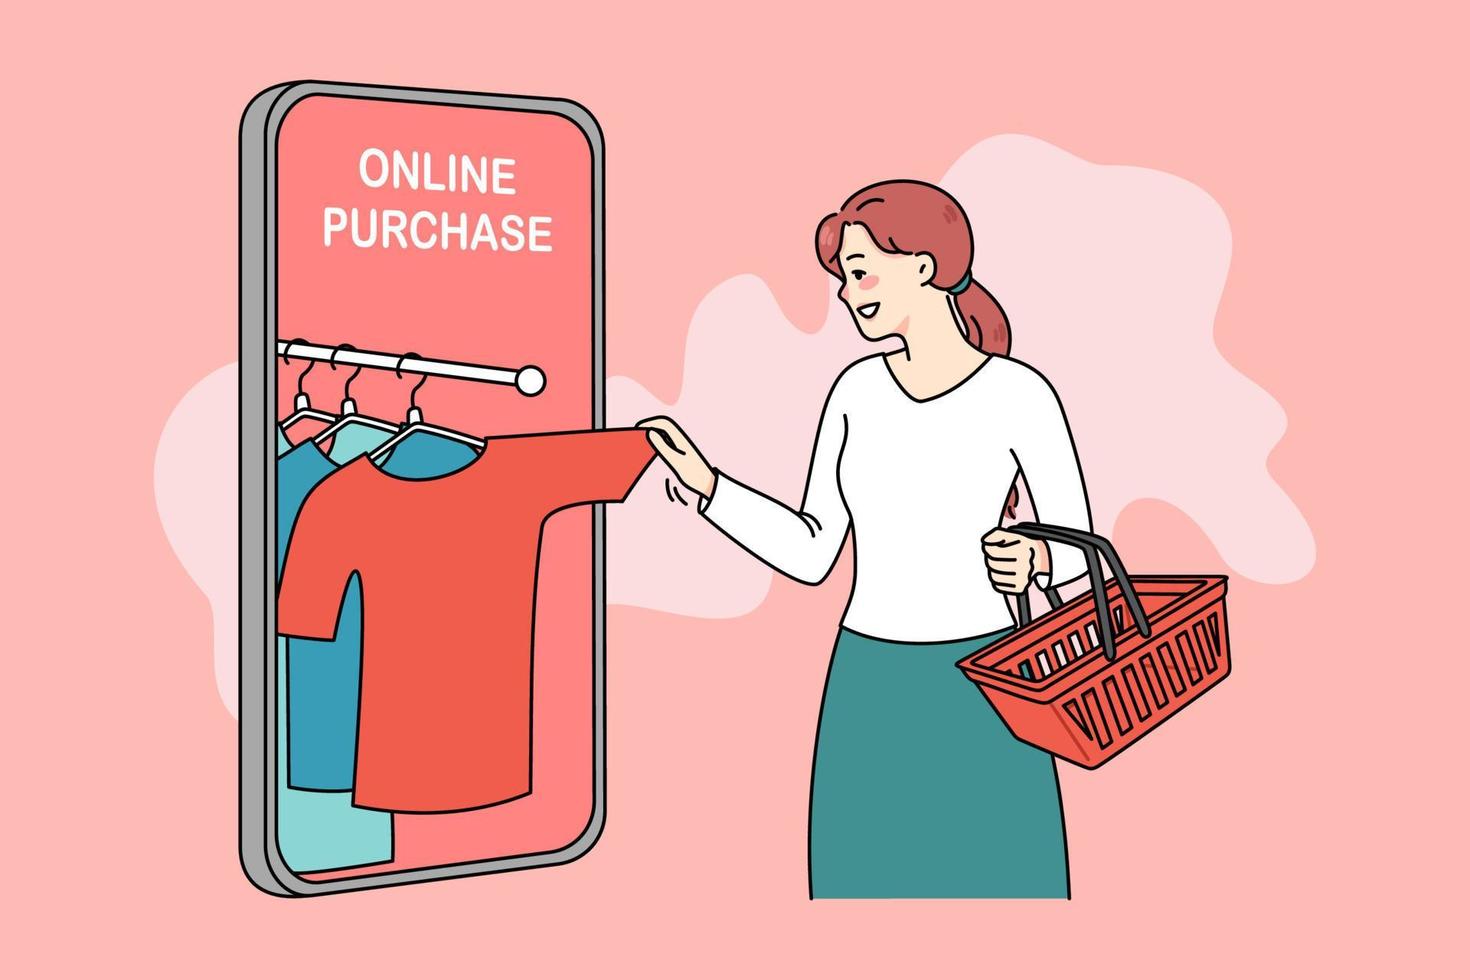 sonriente mujer compras en línea en aplicación en moderno teléfono inteligente contento hembra cliente o comprador compra orden ropa en Internet utilizando Teléfono móvil solicitud. consumismo. vector ilustración.